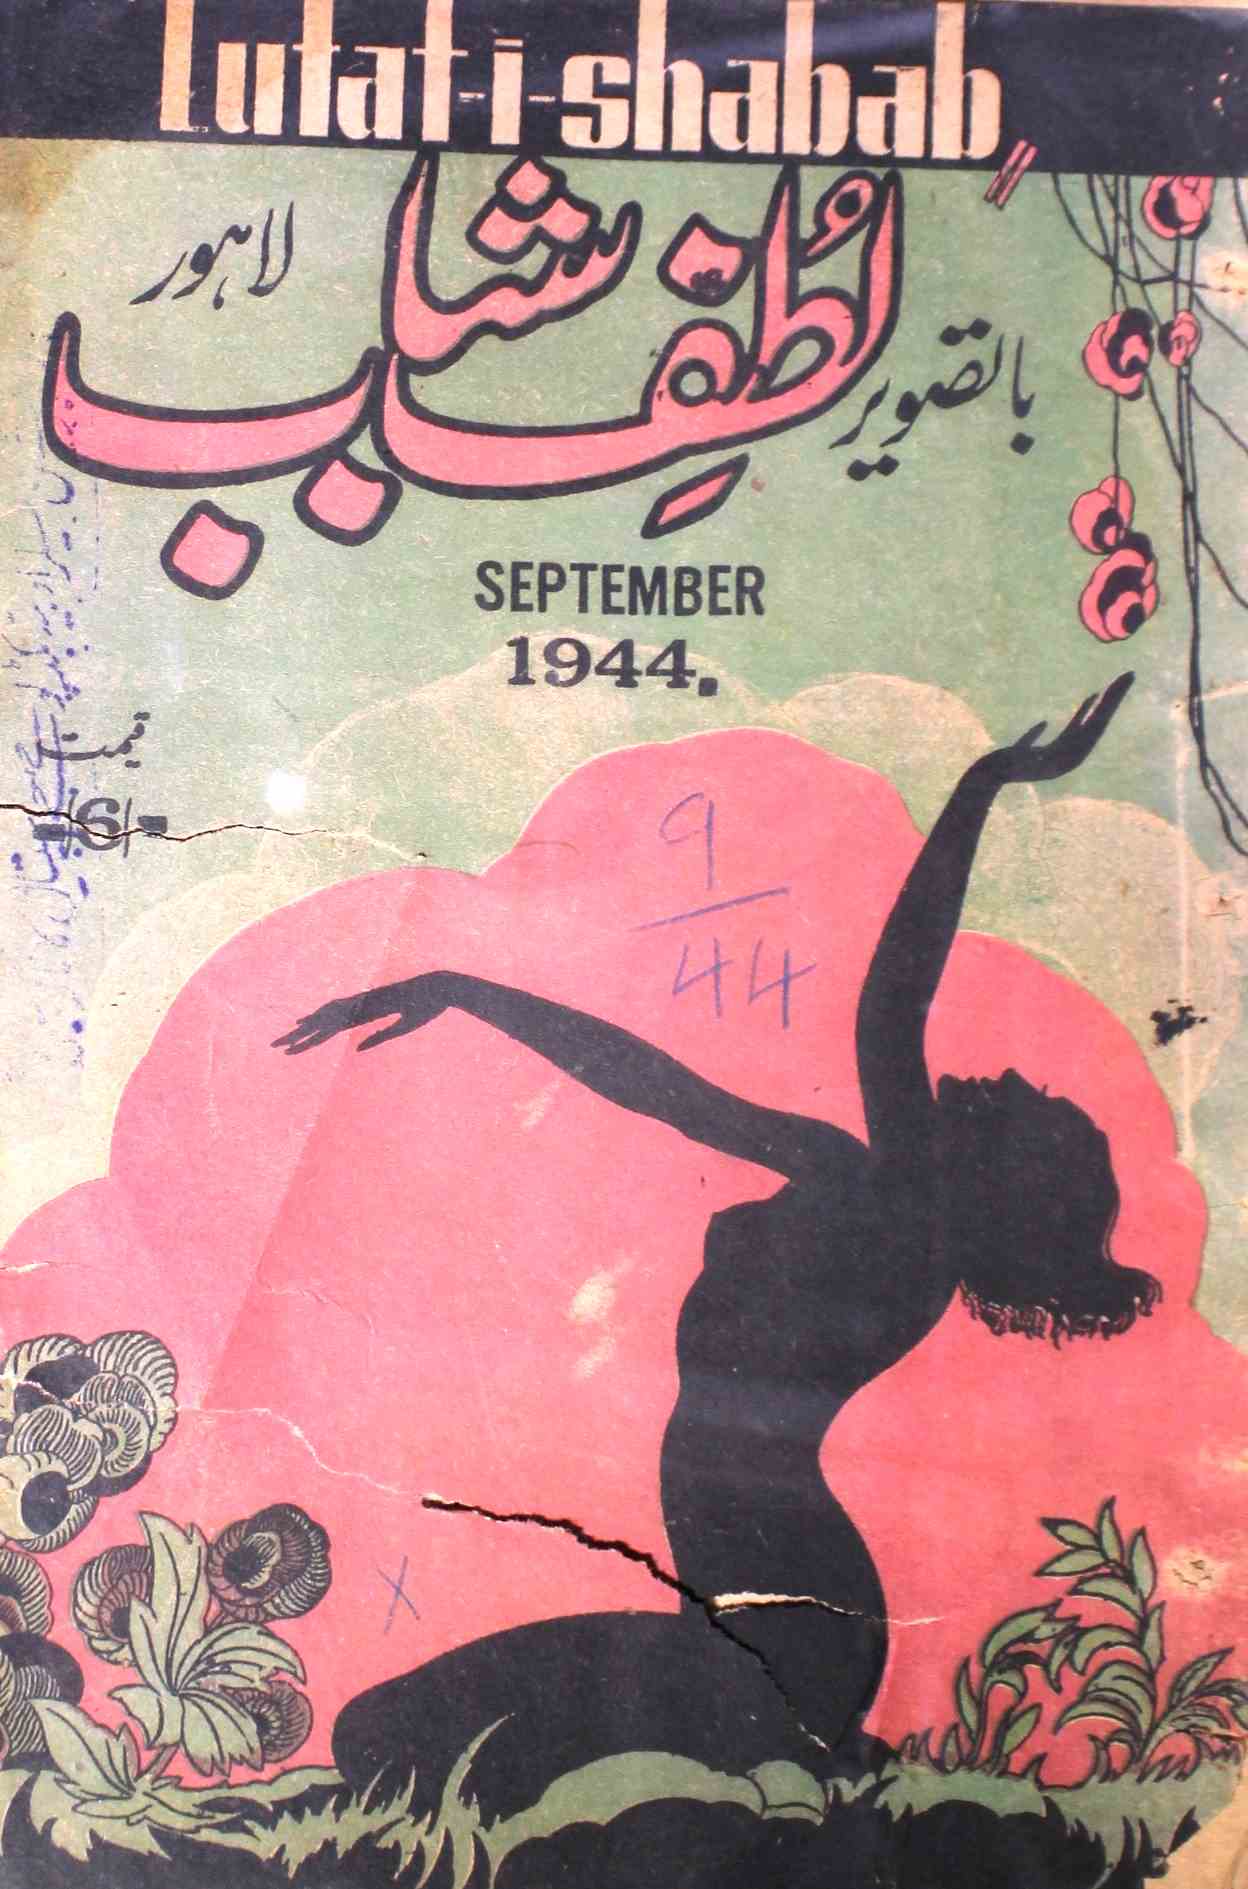 Lutafi Shabab Jild 7 No 9 September 1944-SVK-Shumara Number-009